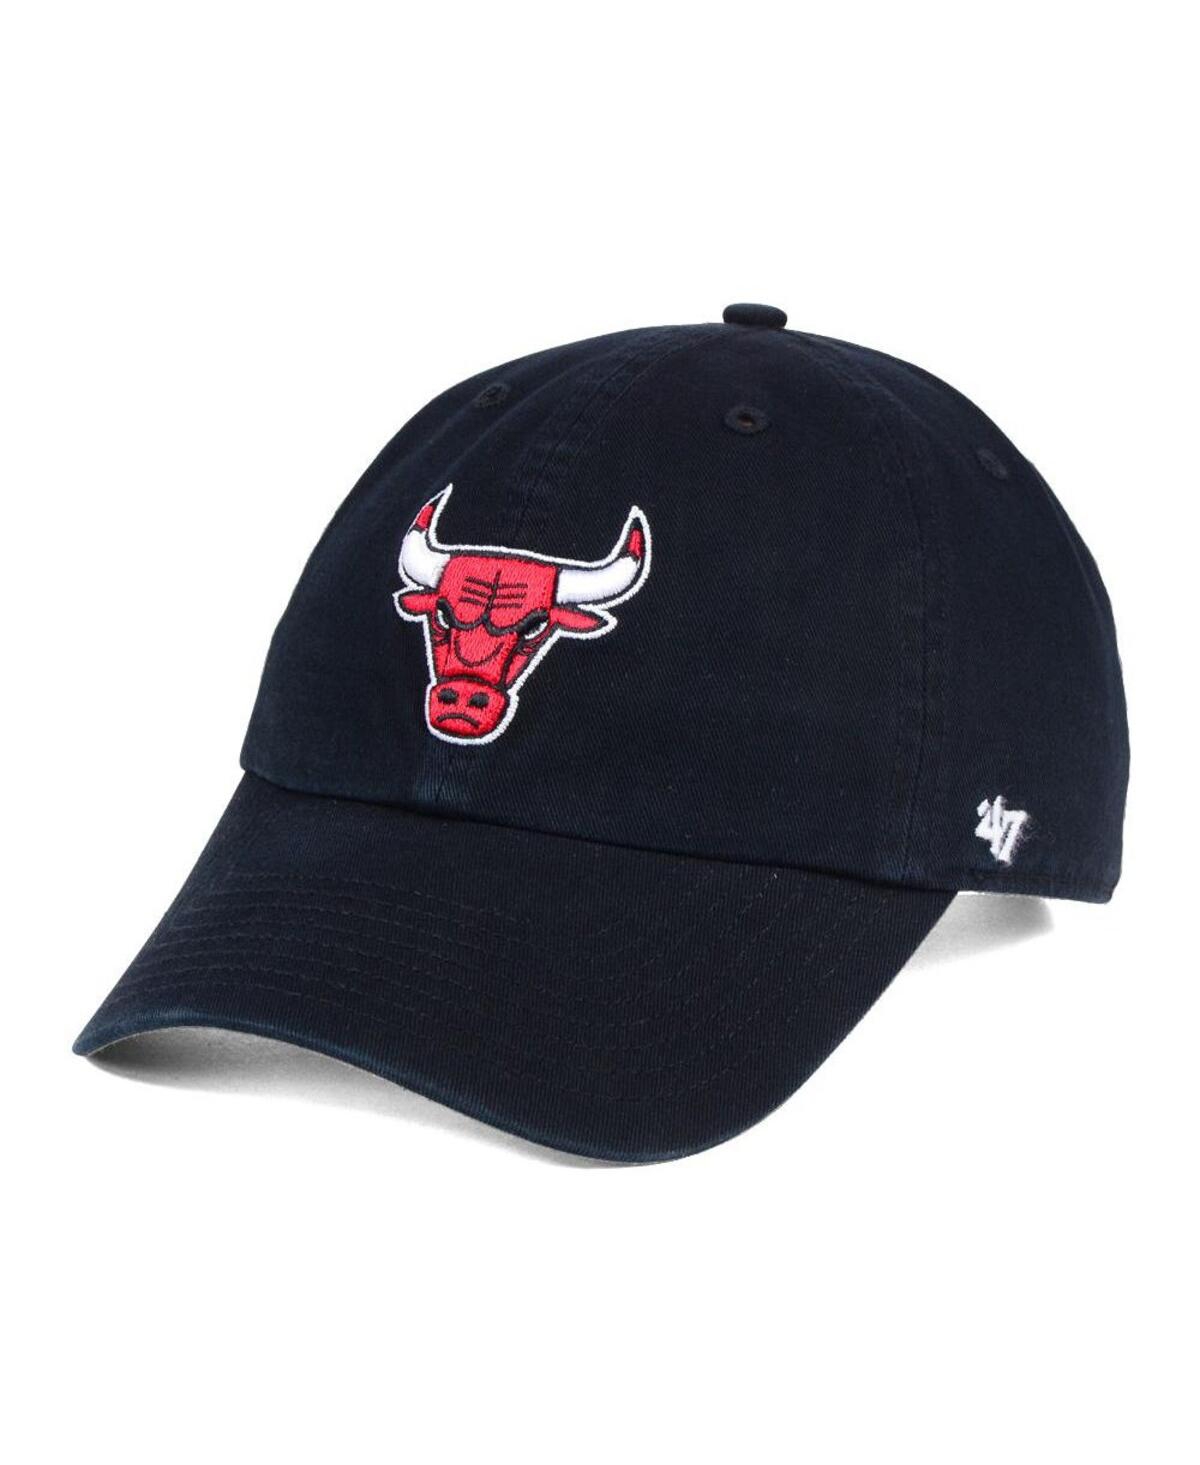 47 Brand Men's Chicago Bulls ' Black Distressed Clean-up Adjustable Hat